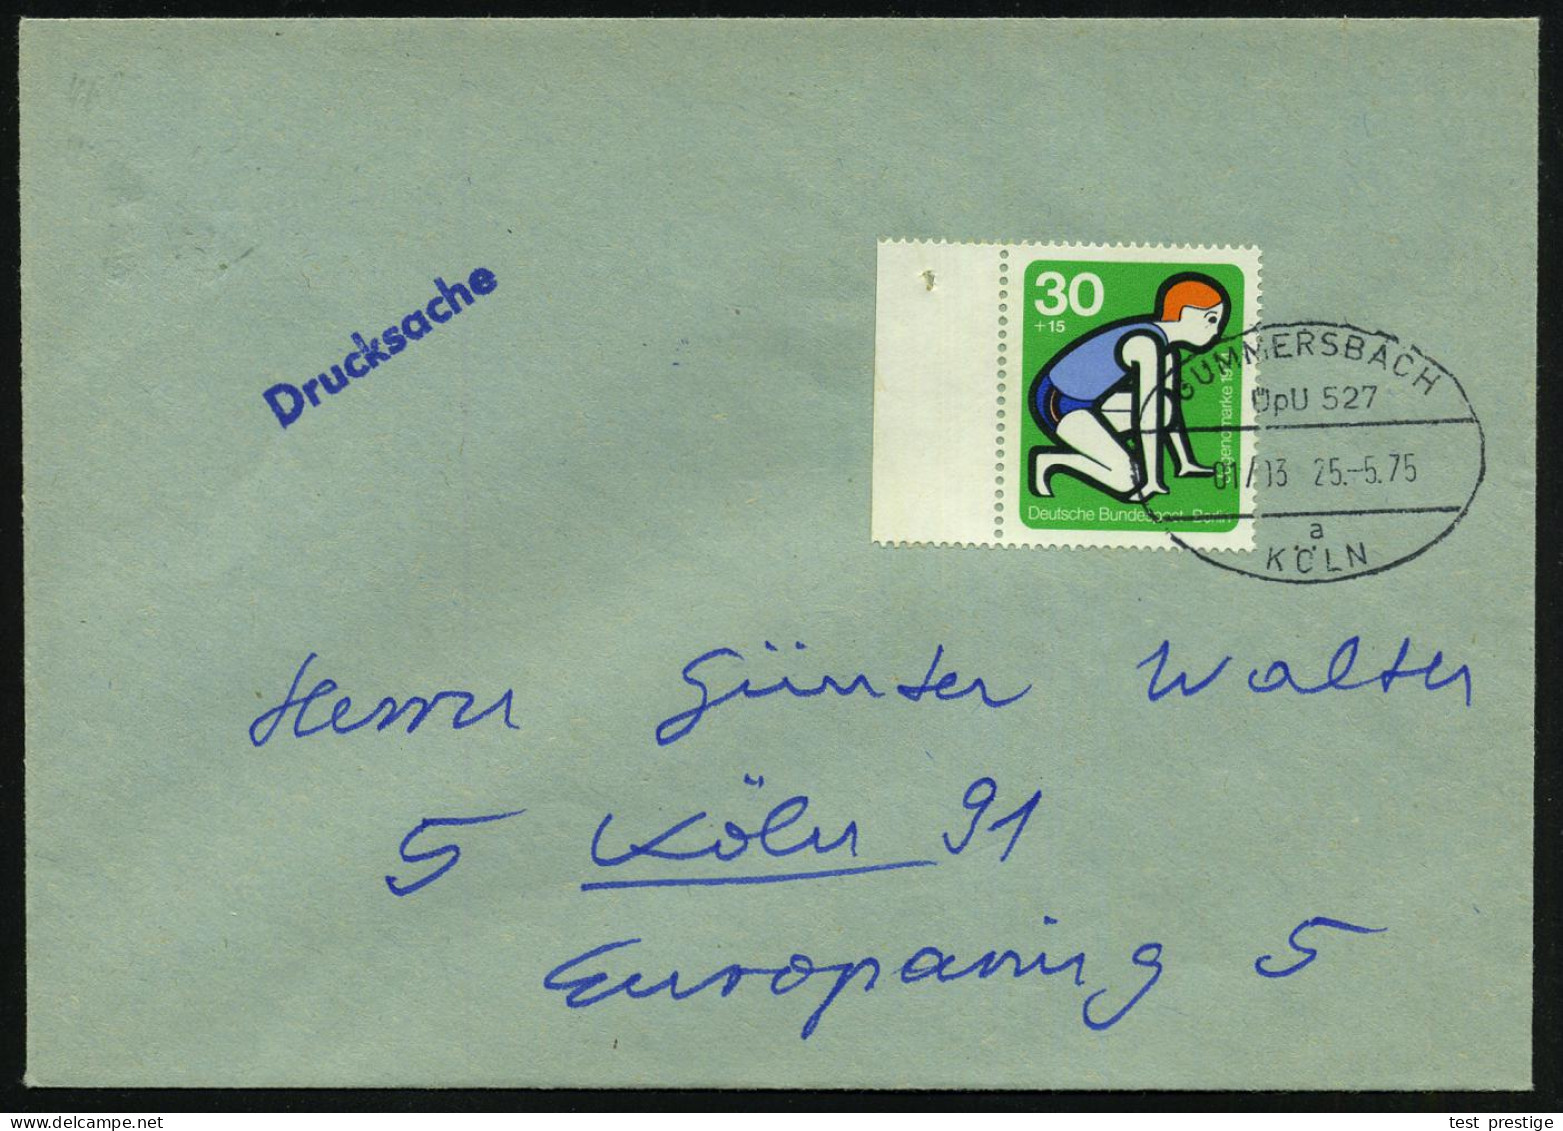 GUMMERSBACH/ ÜpU 527/ 01/ 03/ A/ KÖLN 1975 (25.5.) Oval-Steg = Mobiles Postamt Im Überland-Postomnibus , Klar Gest. Inl. - Autos